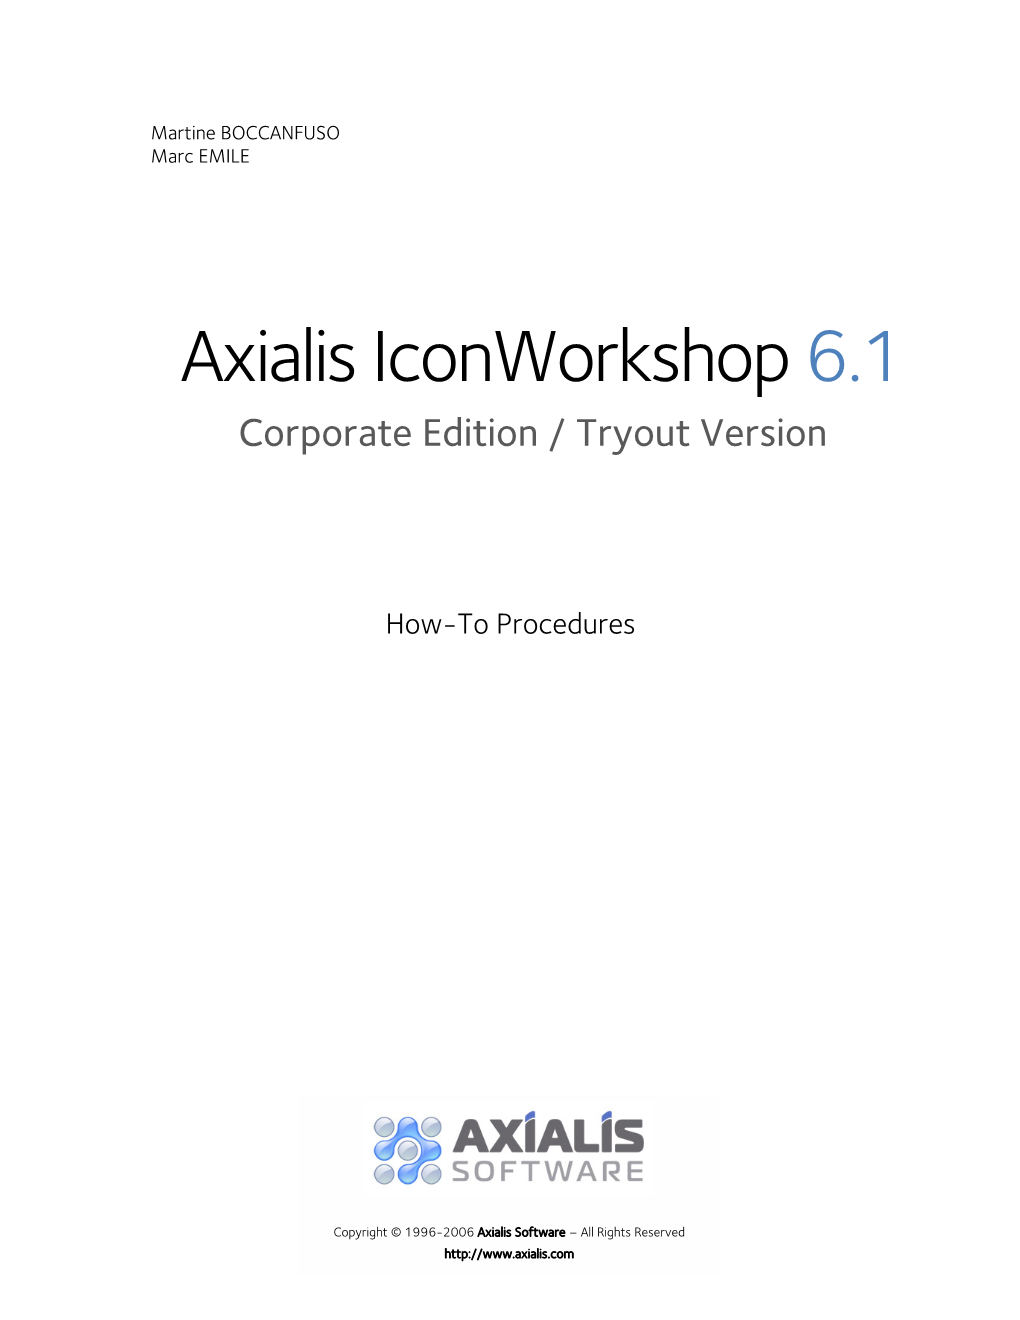 Axialis Iconworkshop 6.1